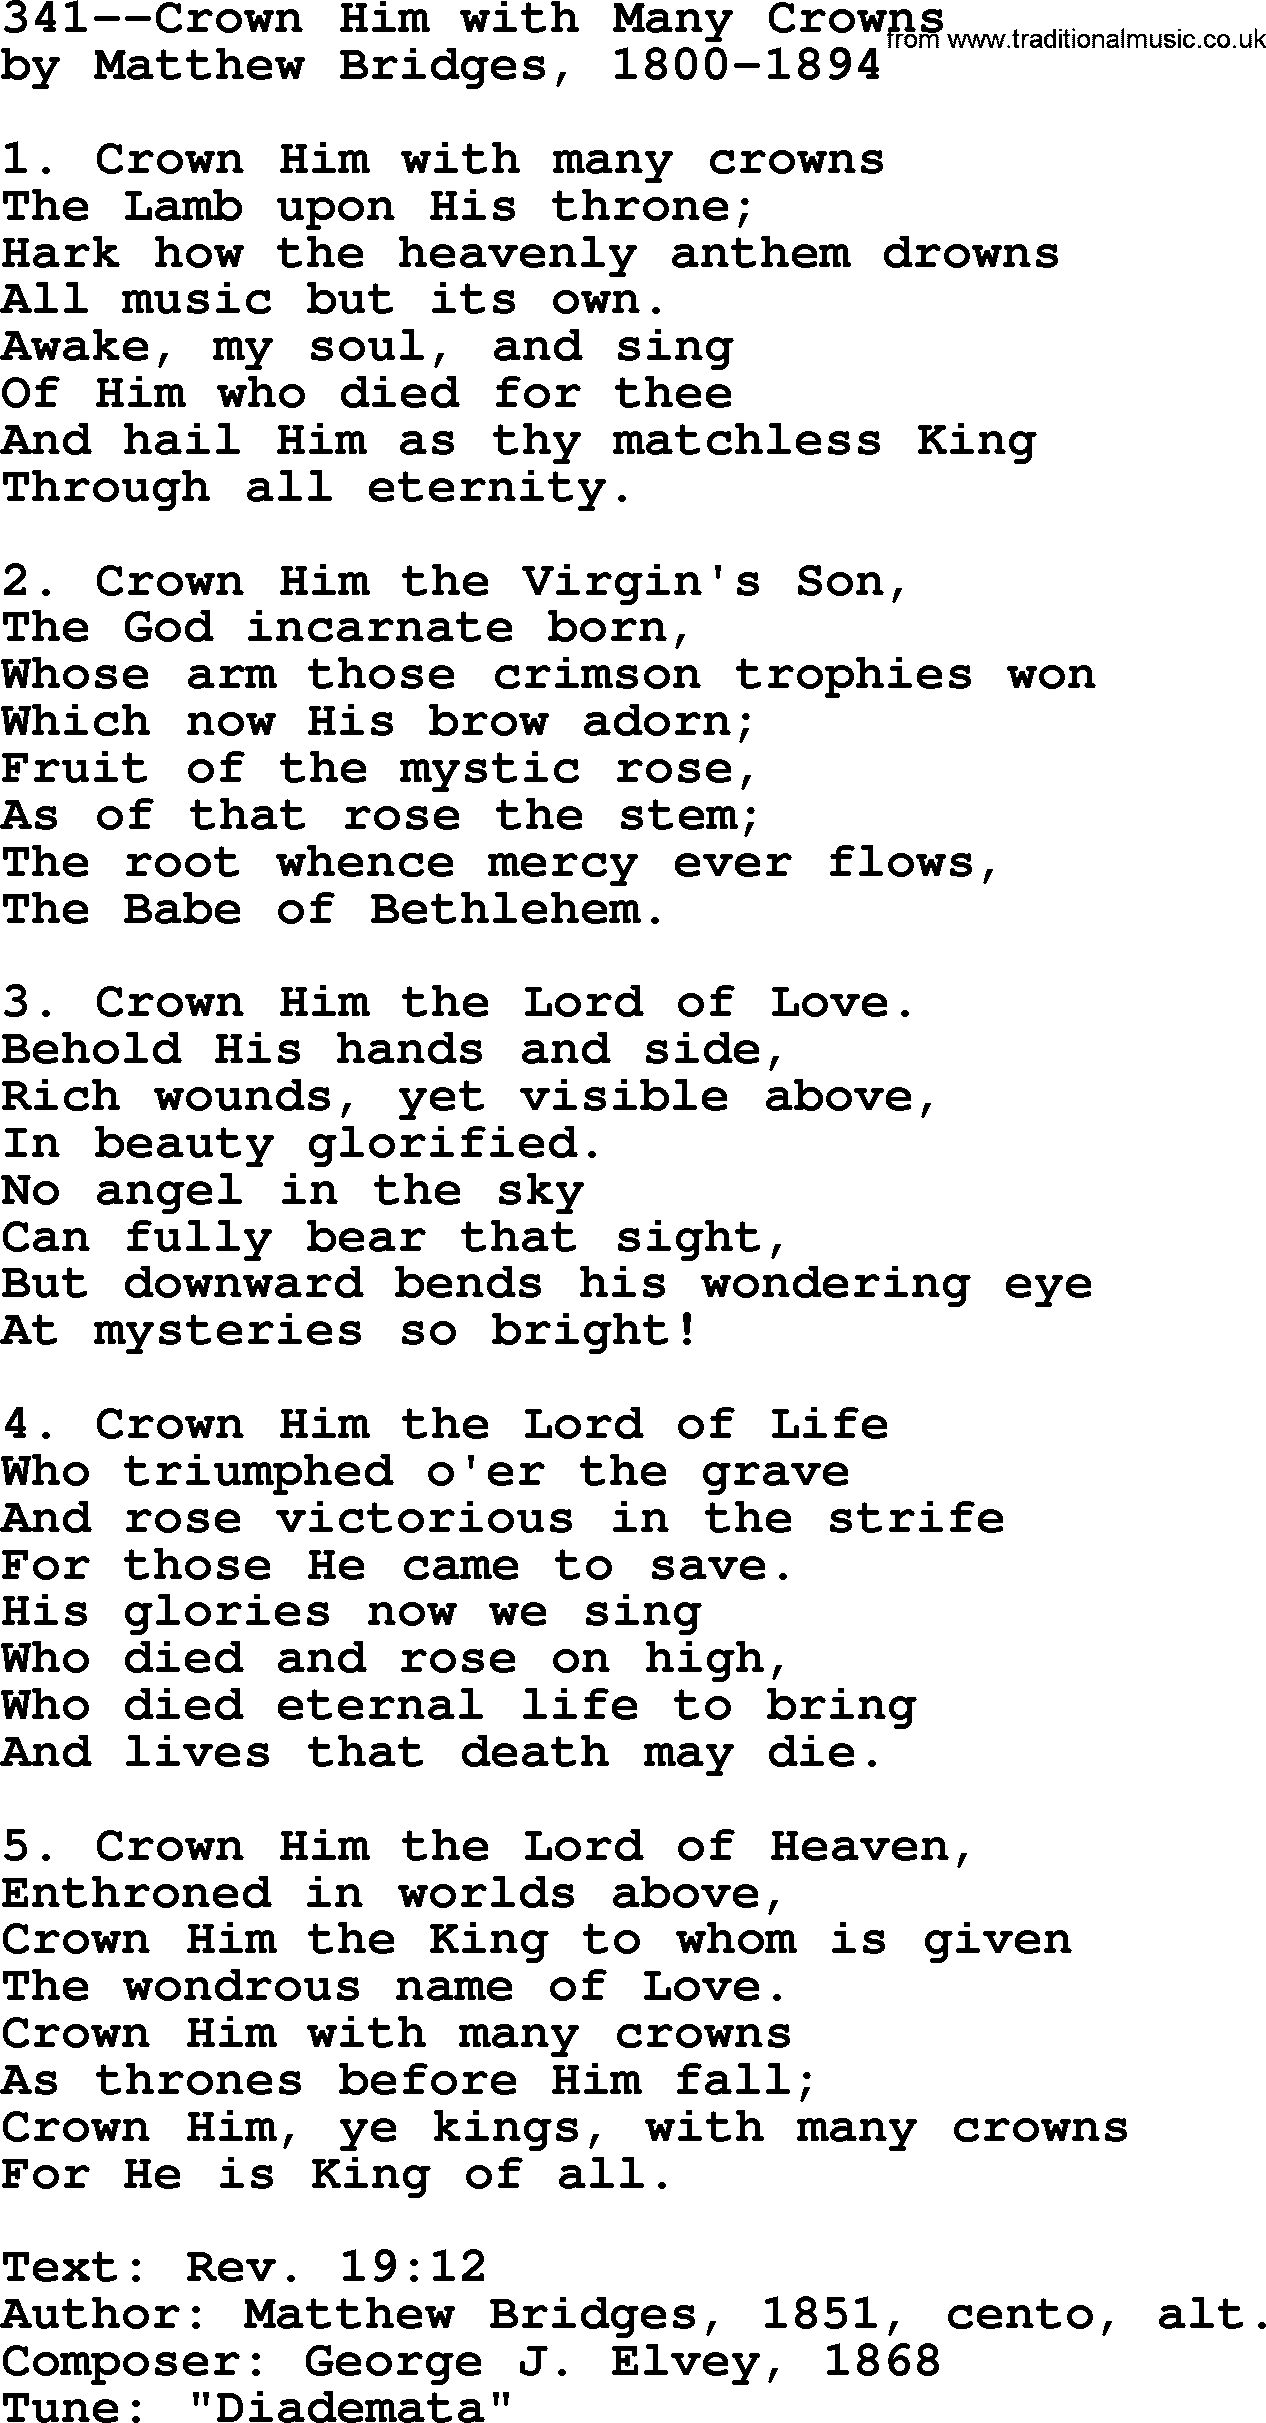 Lutheran Hymn: 341--Crown Him with Many Crowns.txt lyrics with PDF